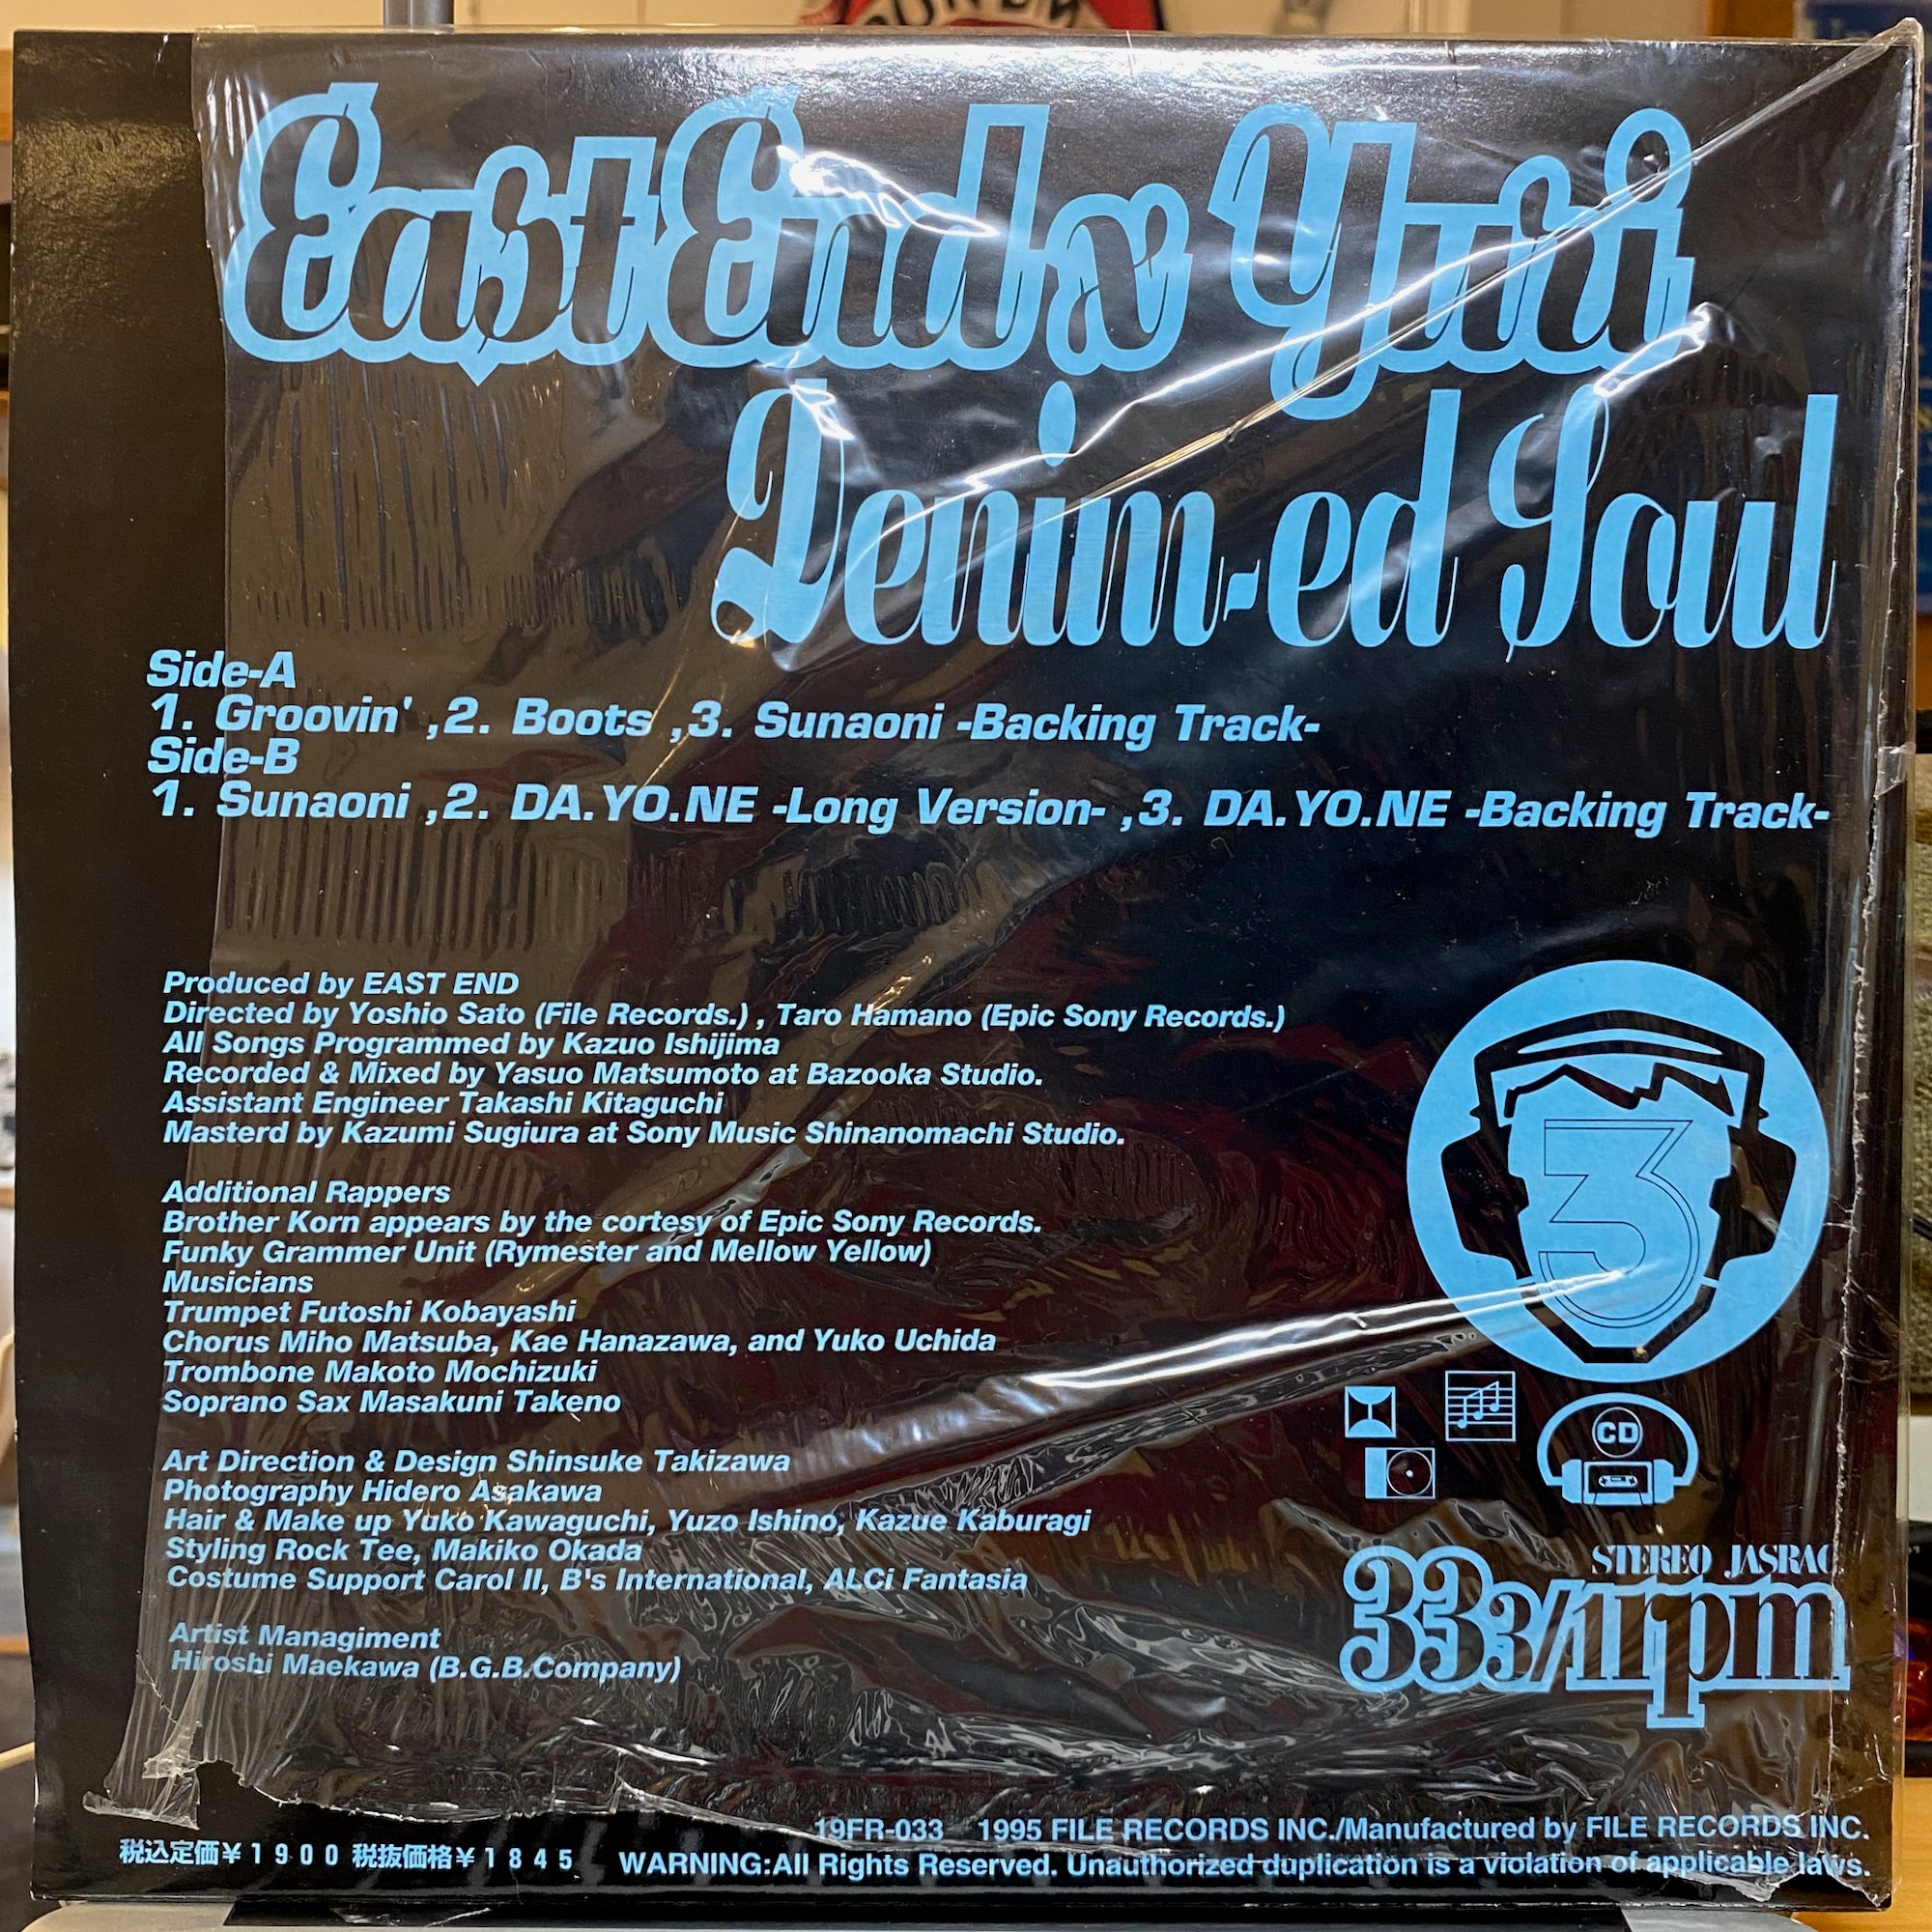 East End x Yuri / Denimed Soul | VINYL7 RECORDS